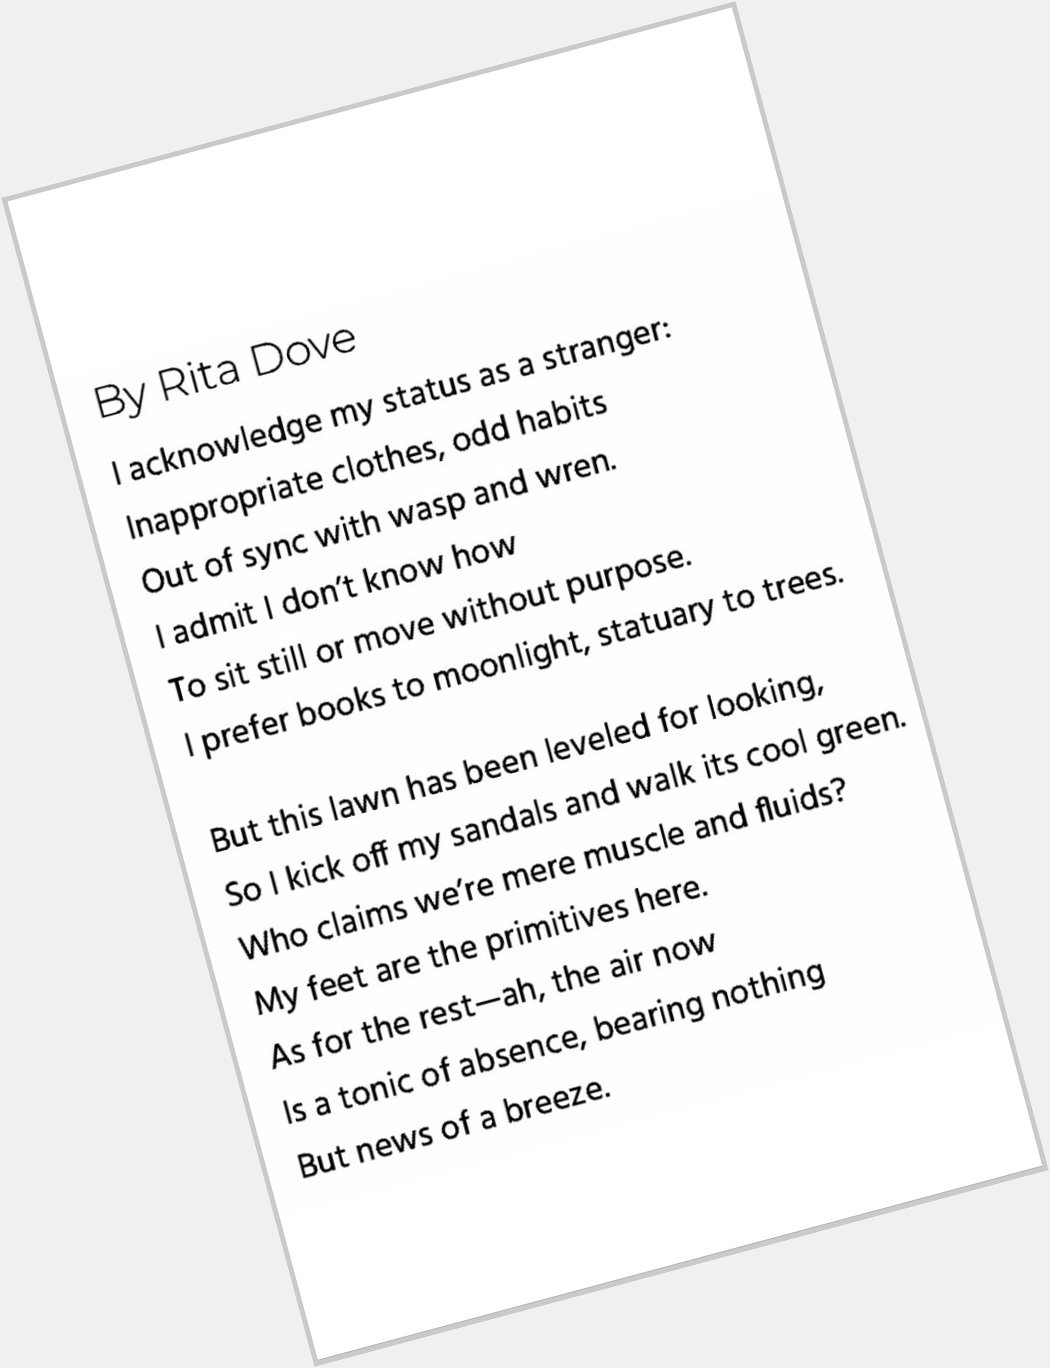 & so happy to share my birthday with the wonderful Rita Dove   